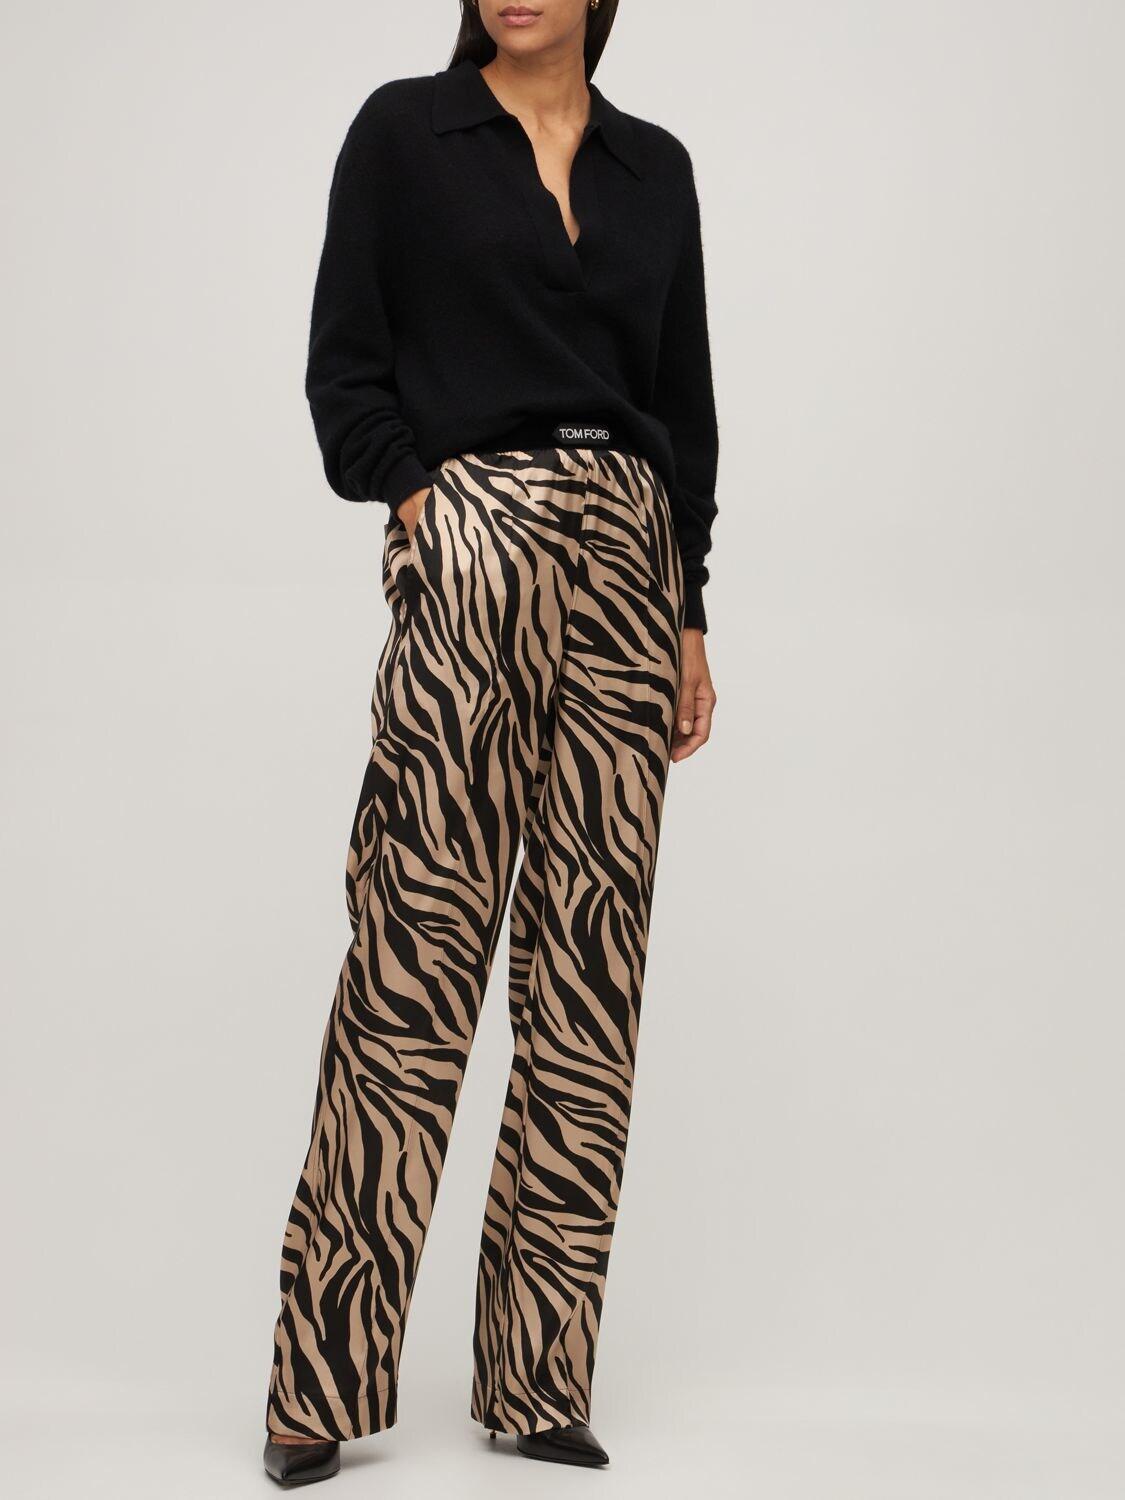 Tom Ford Zebra Print Logo Silk Satin Pajama Pants | Lyst